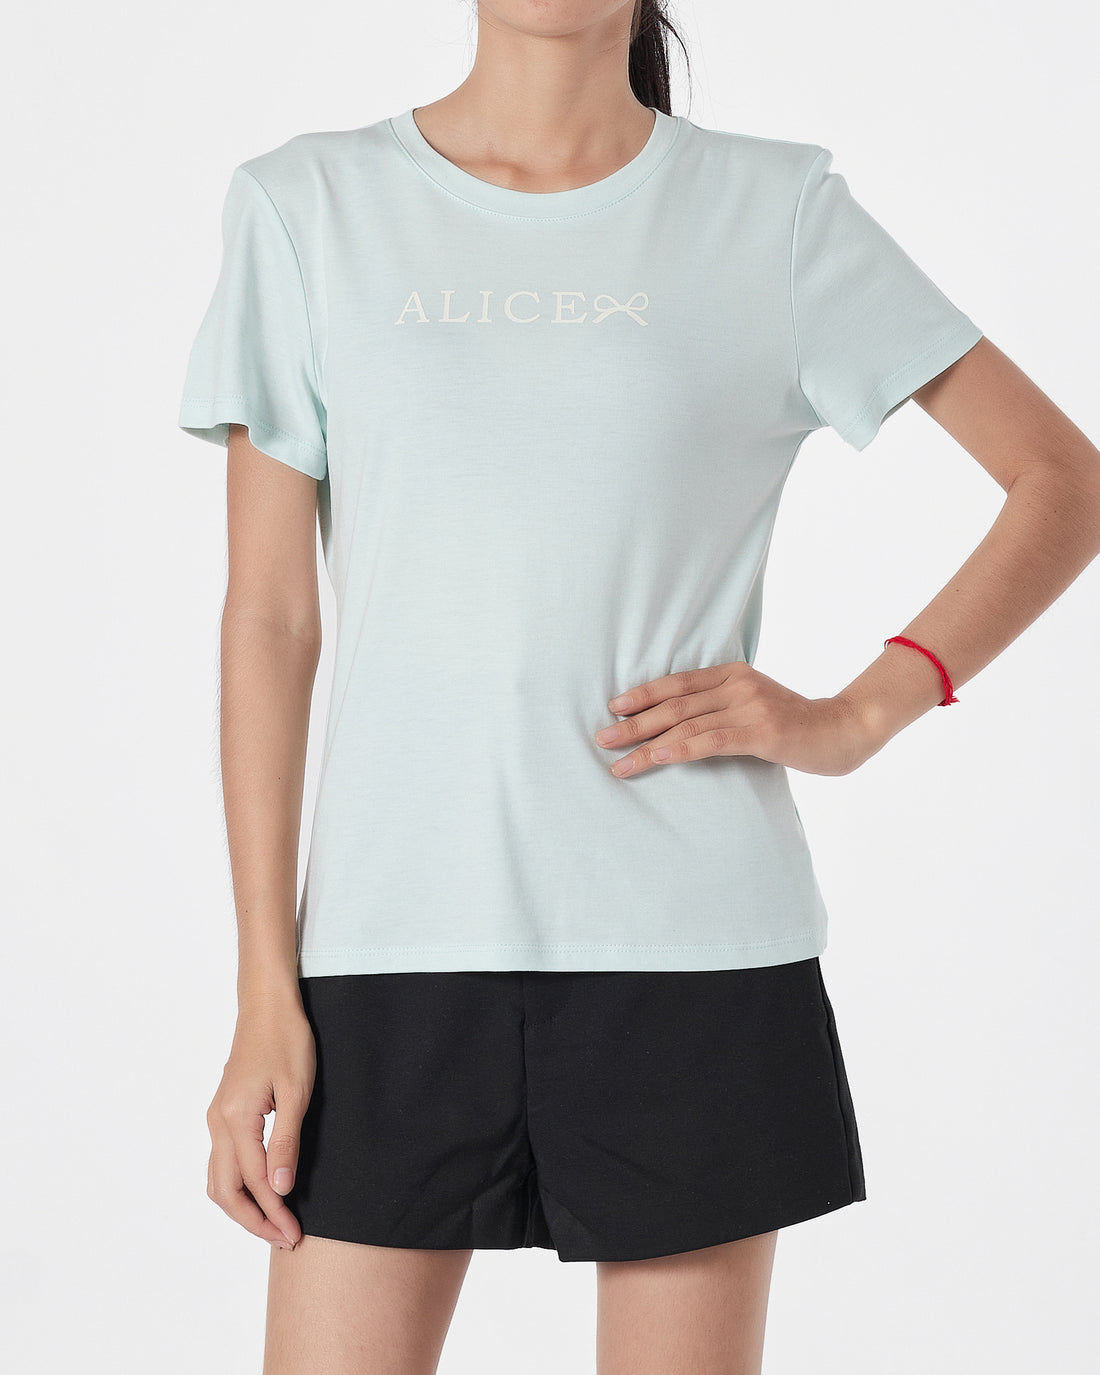 ALICE Lady Mint T-Shirt 12.90